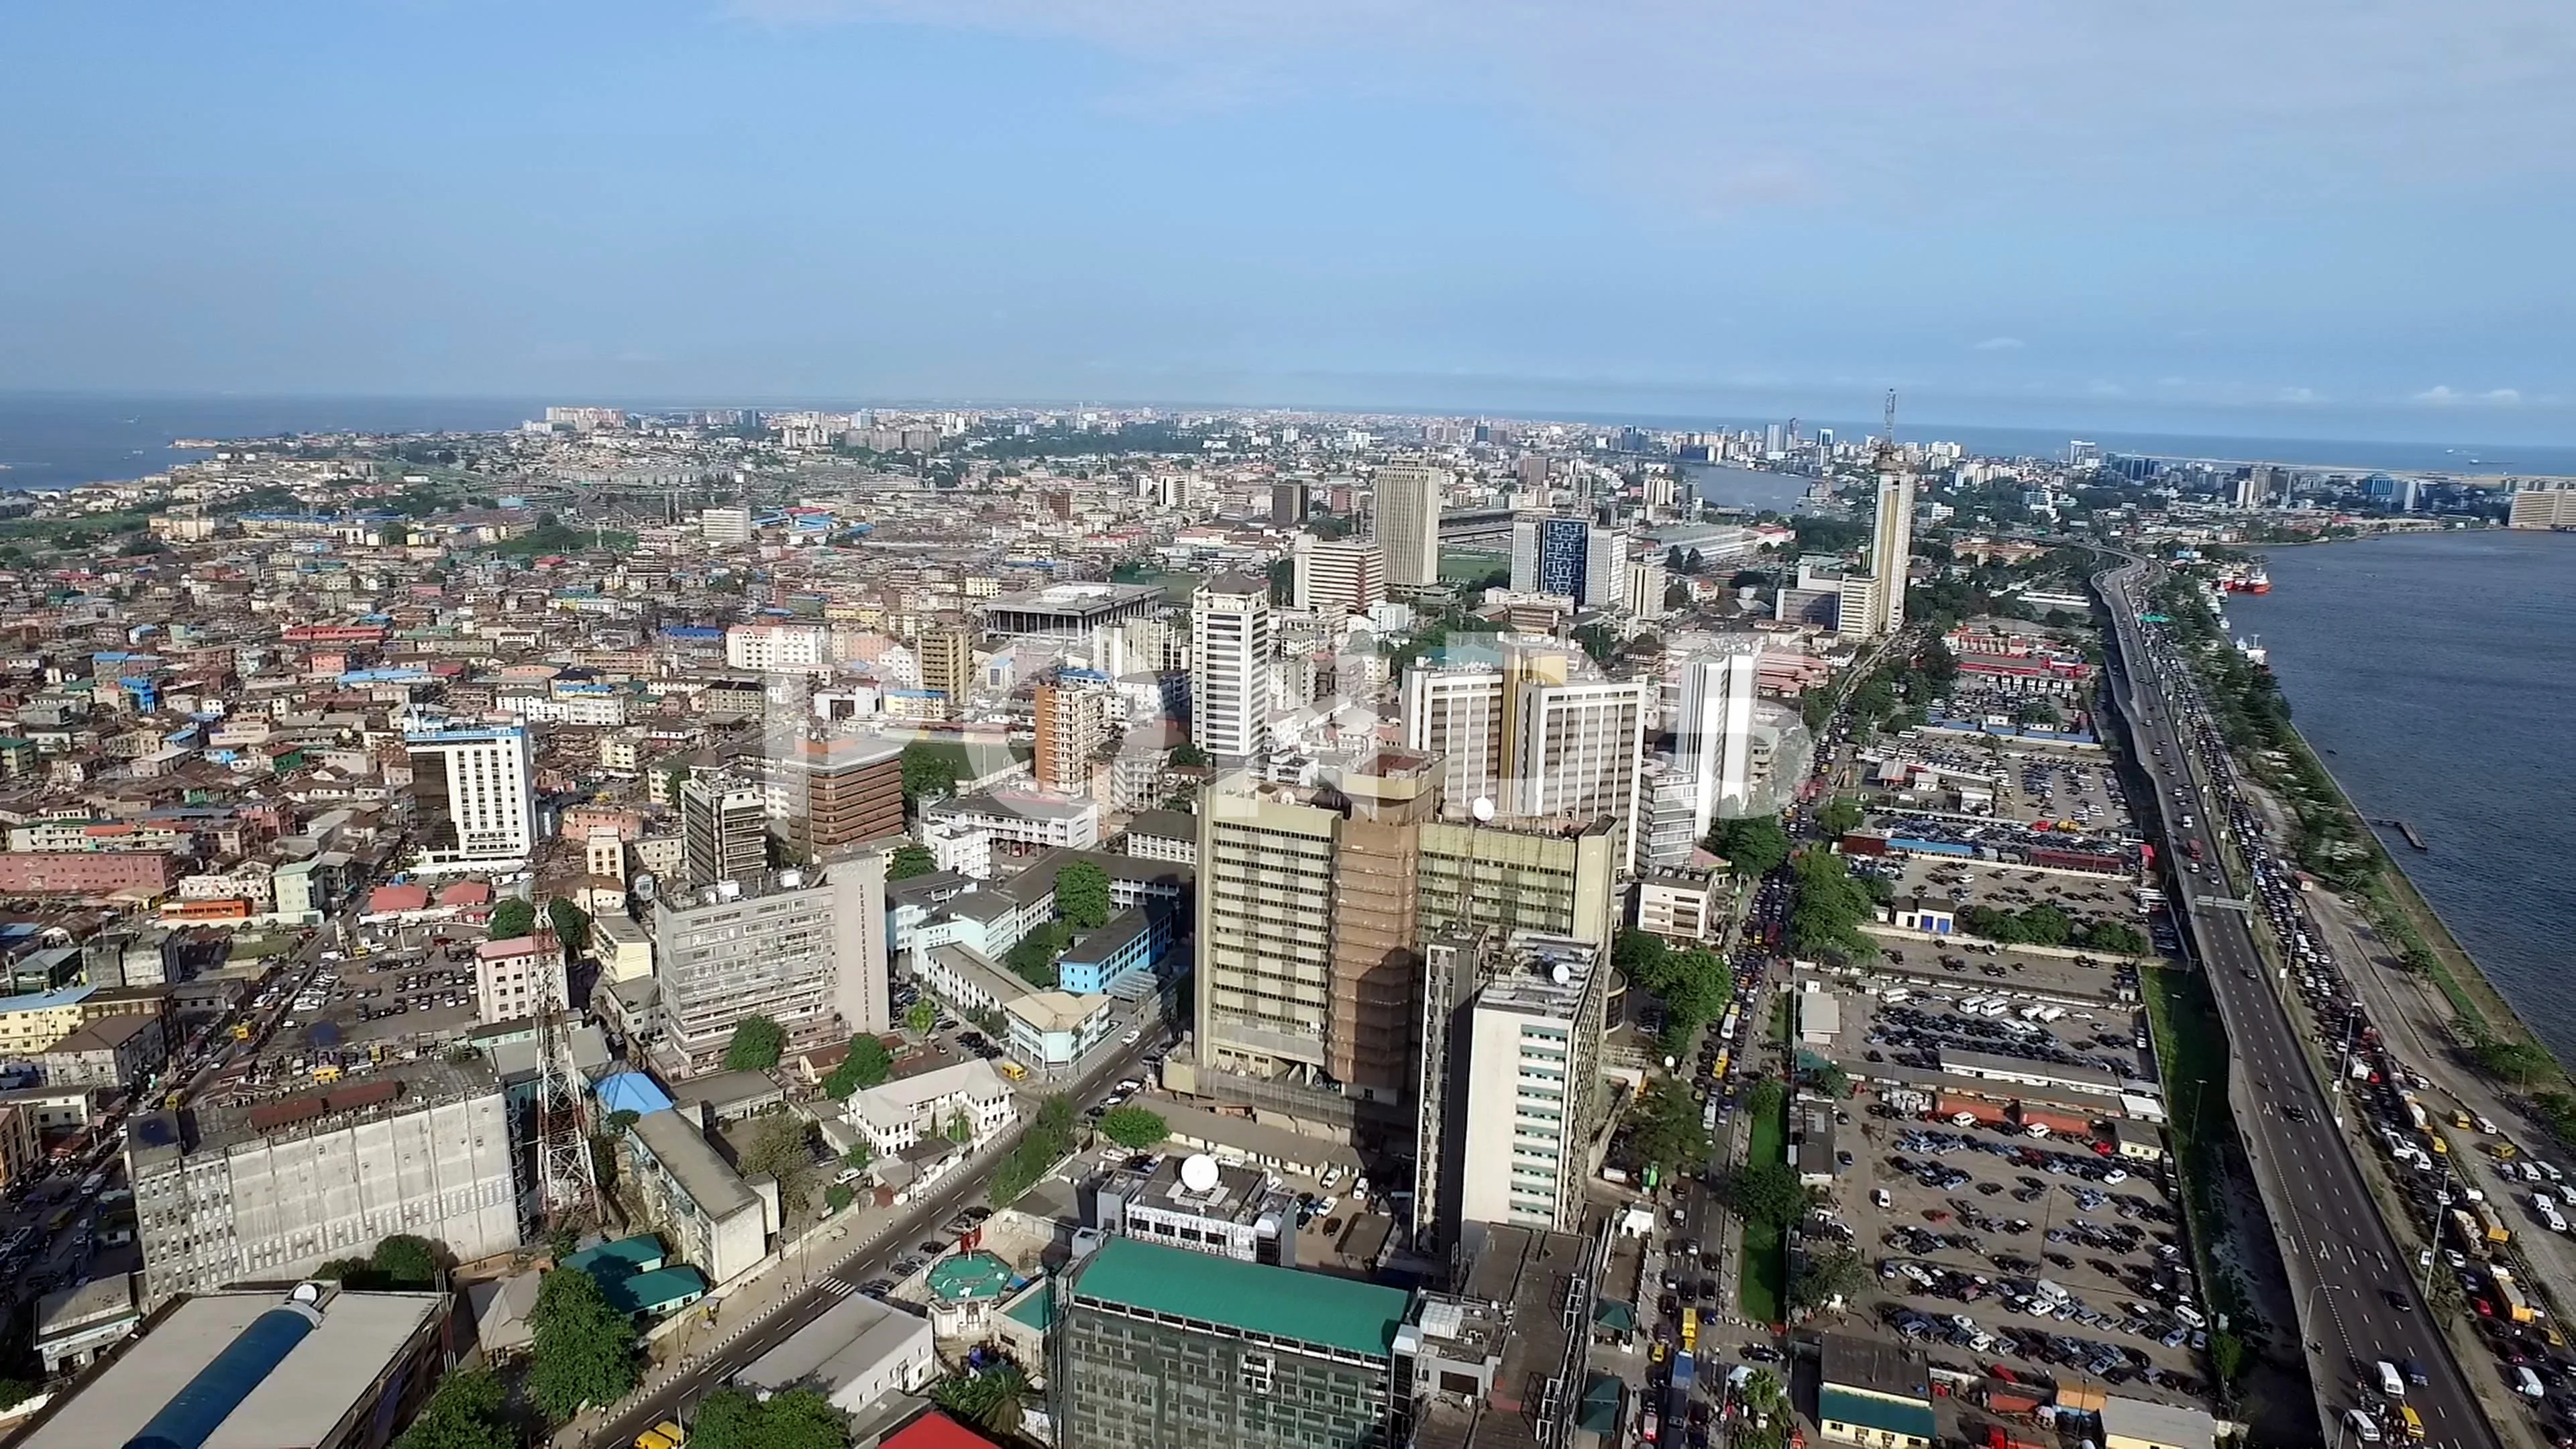 Downtown Lagos Scenes00010786 | Stock Video | Pond5